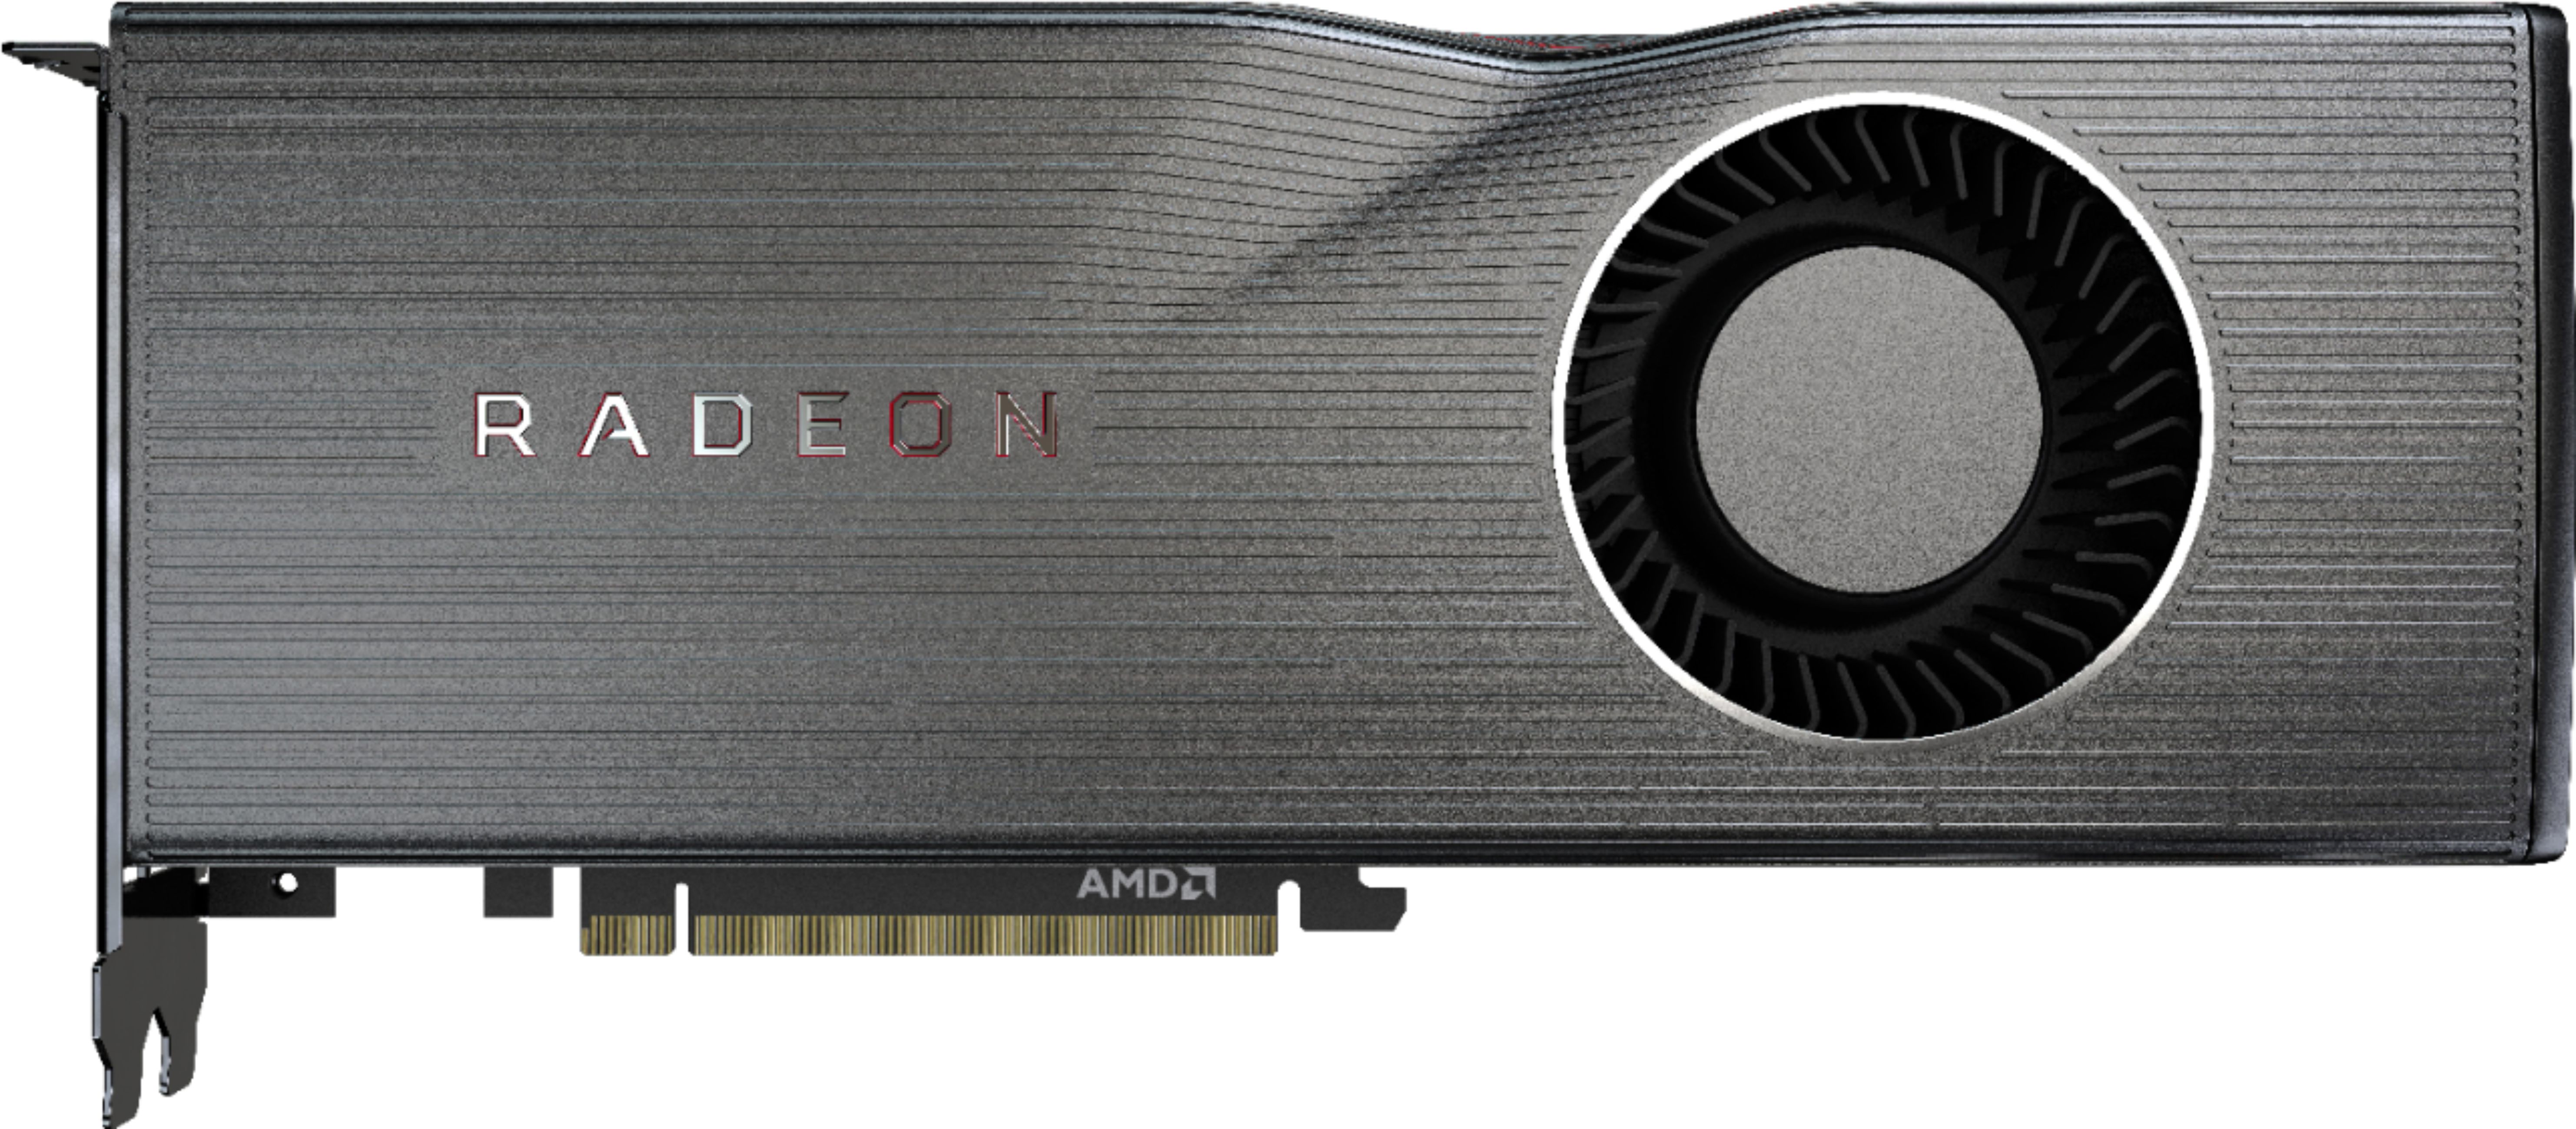 XFX AMD Radeon RX 5700 XT 8GB GDDR6 PCI 